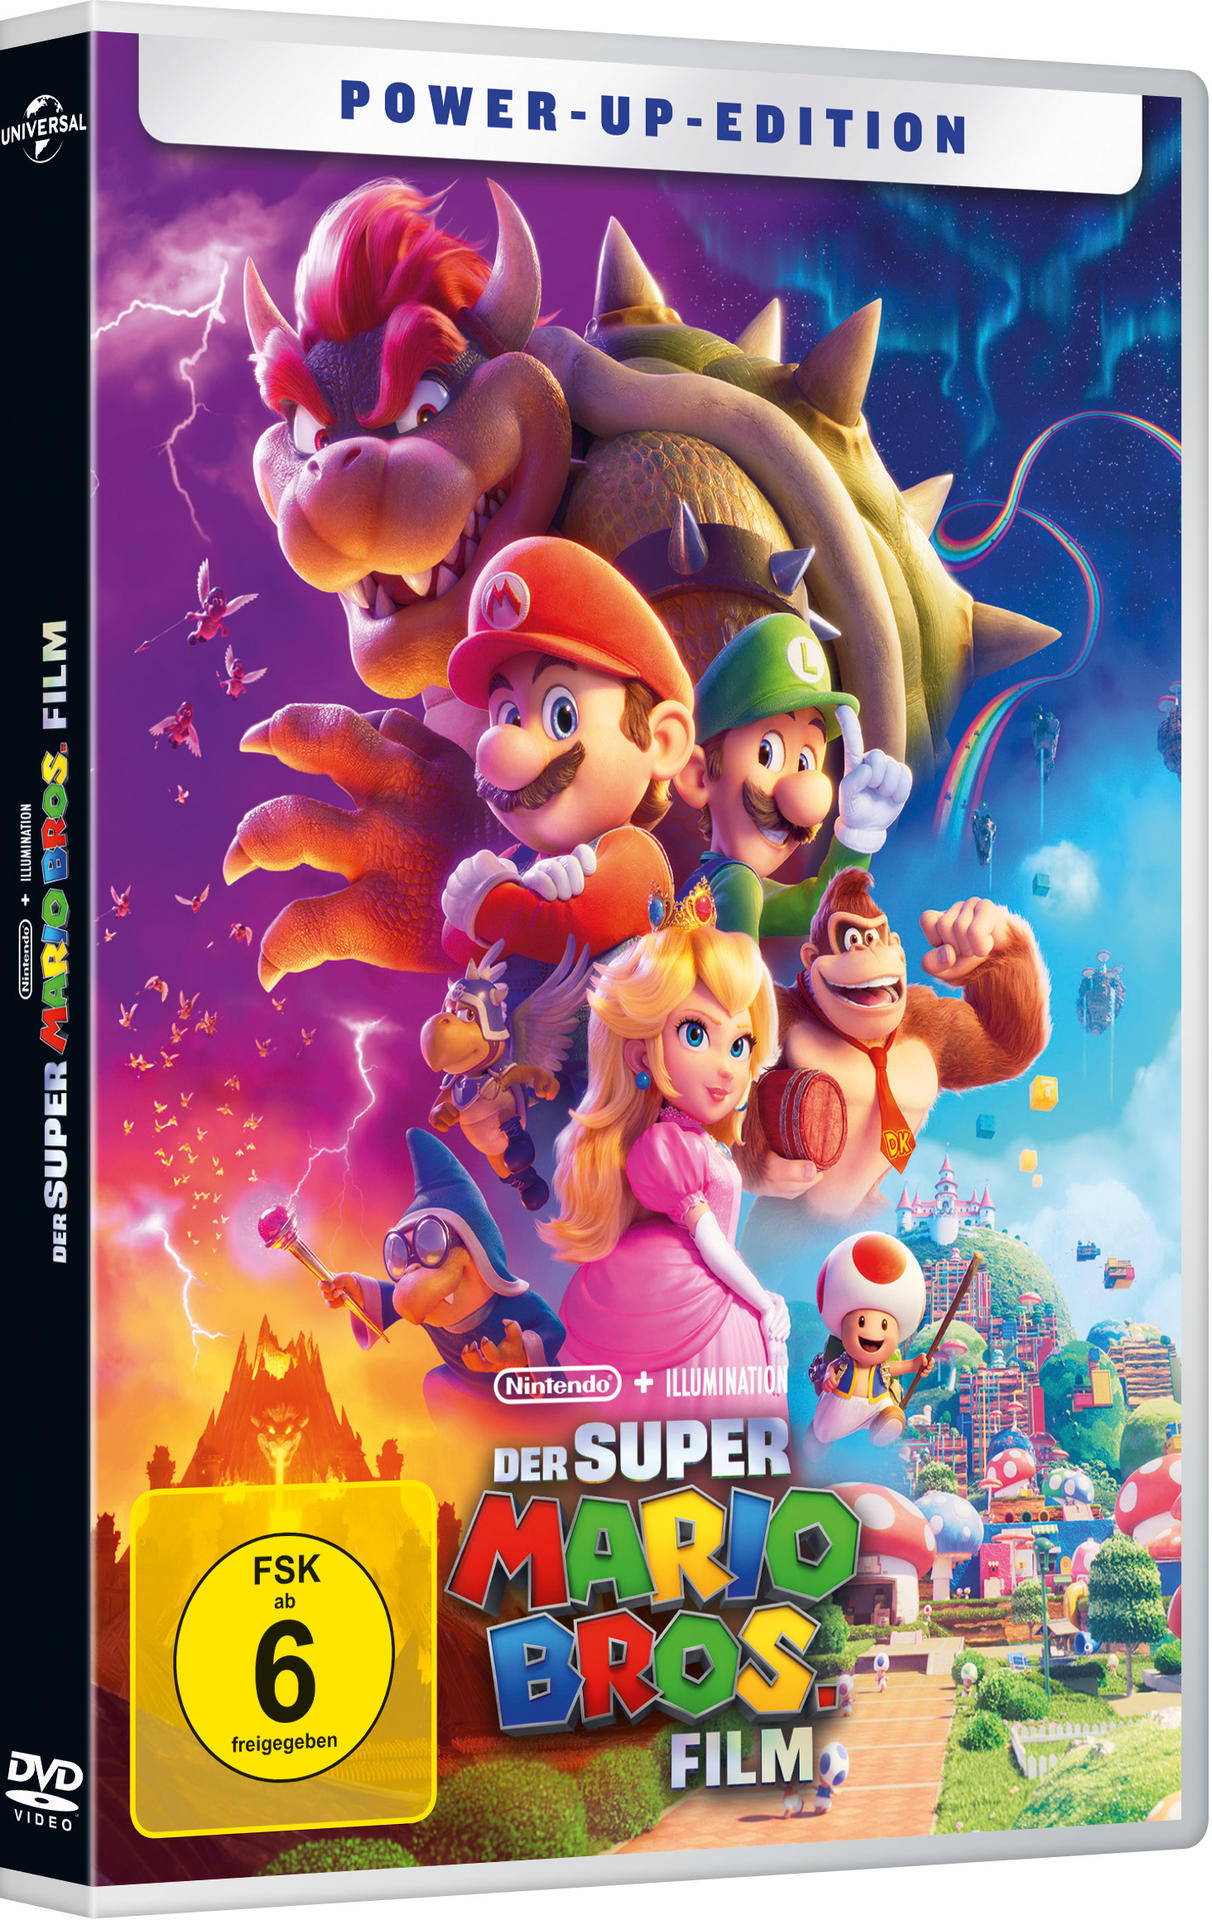 Film DVD Bros. Mario Super Der